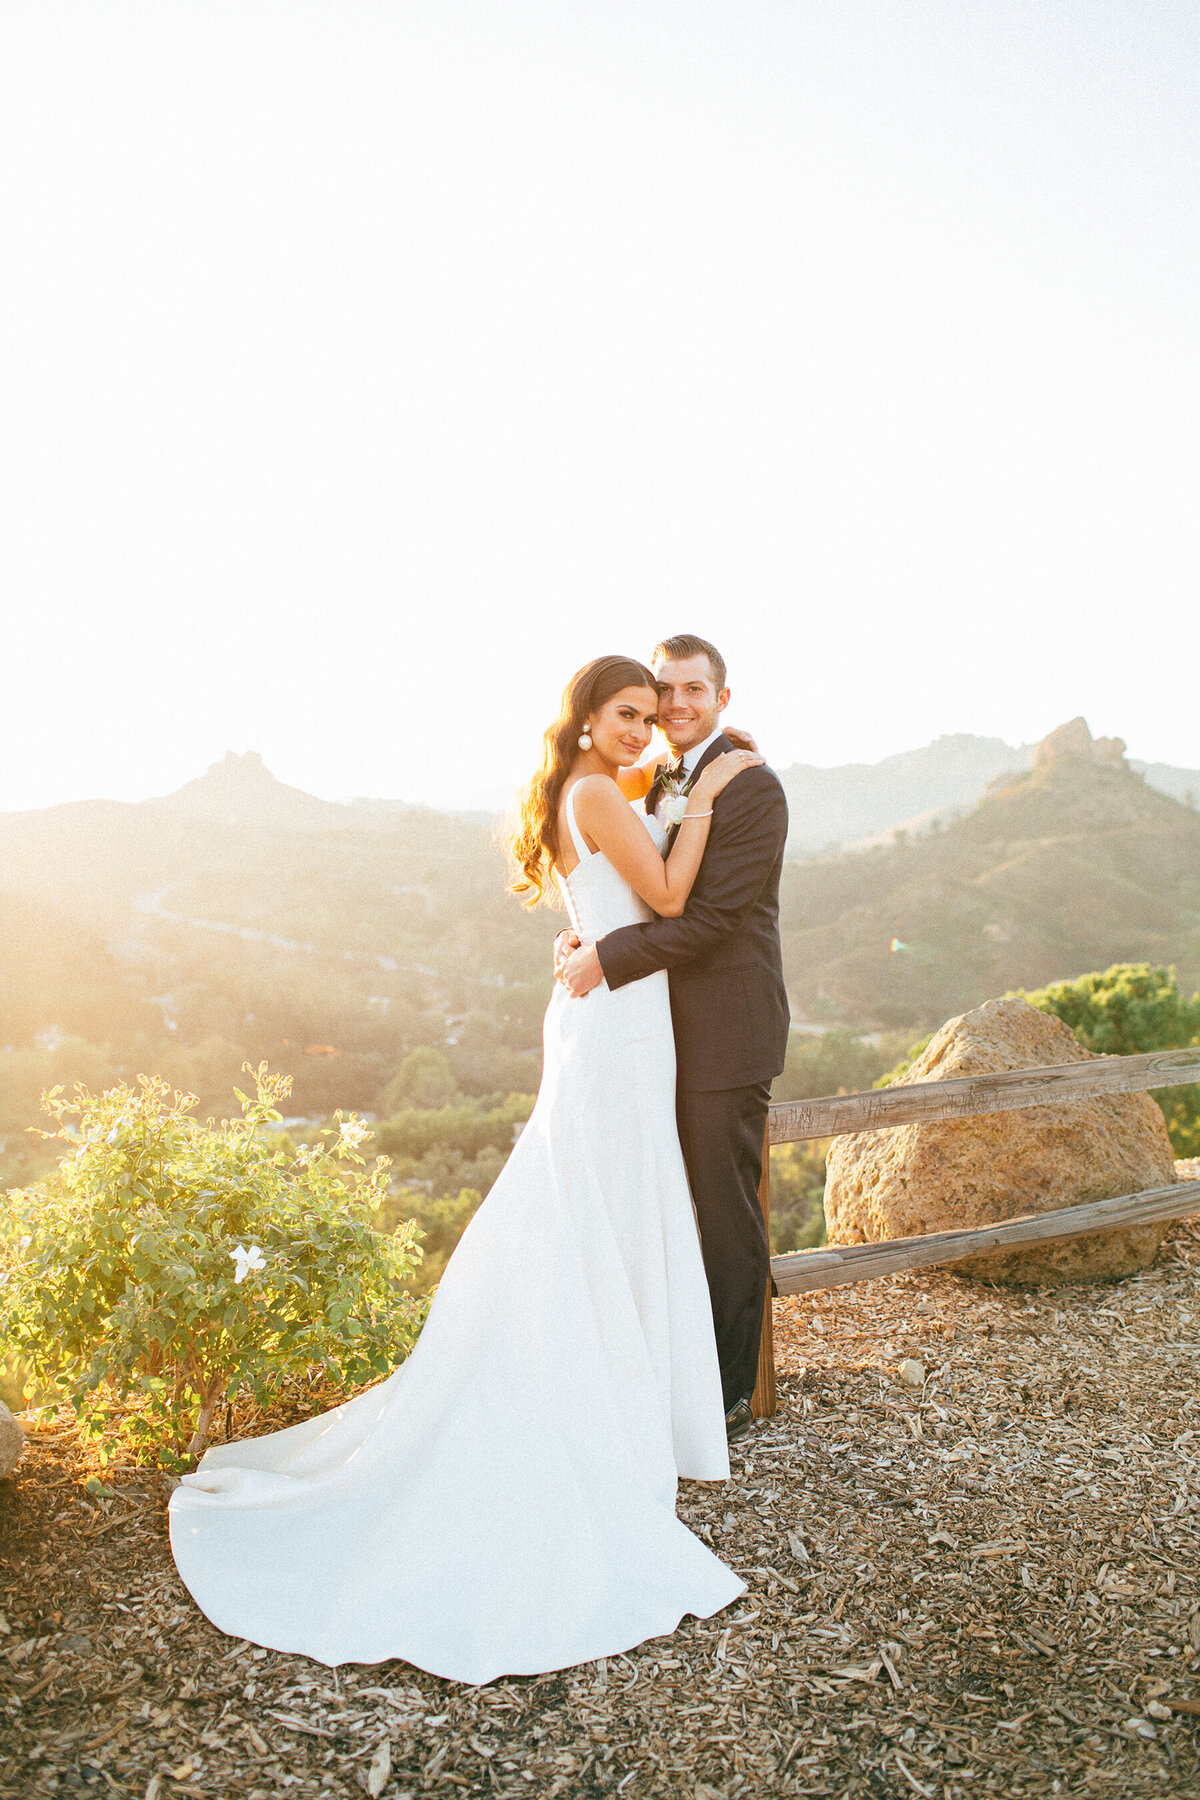 Southern California Wedding Planner - Robin Ballard Events - Cielo Farms - Southern California Wedding Planner - Robin Ballard Events - IzzyandNick-Teasers-35